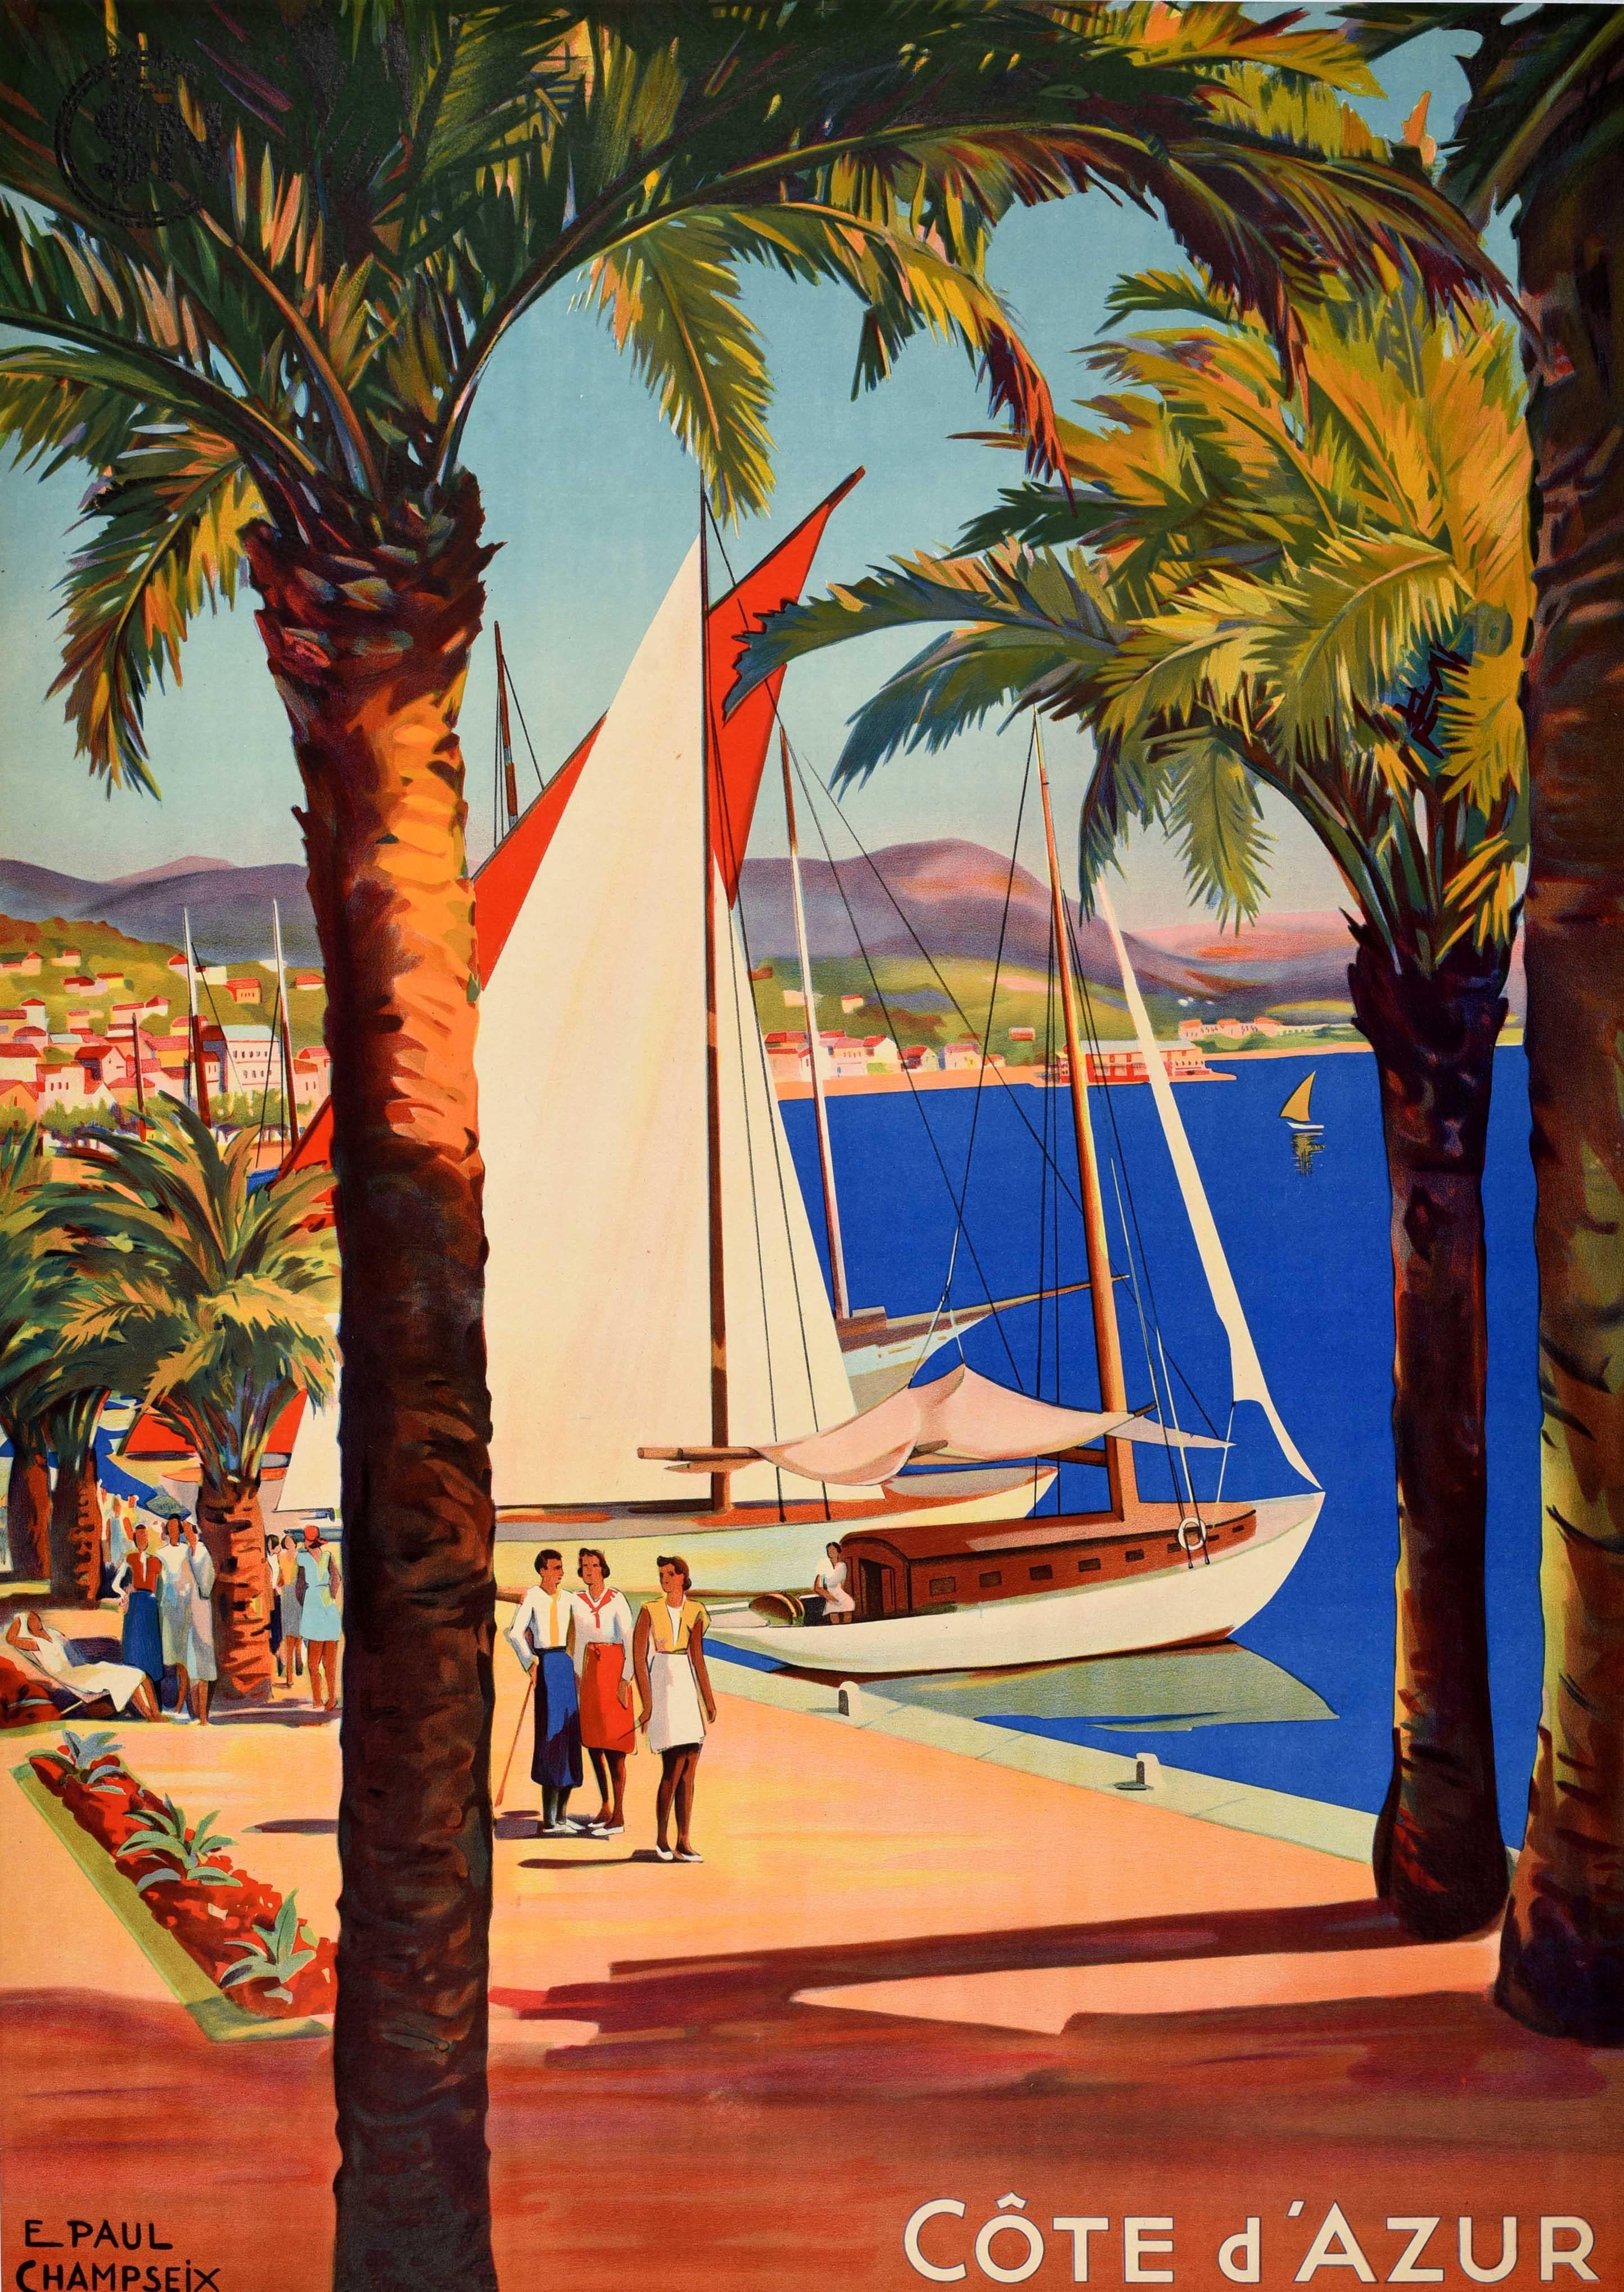 Mid-20th Century Original Vintage Travel Poster Bandol Cote d'Azur French Riviera Art Deco Design For Sale